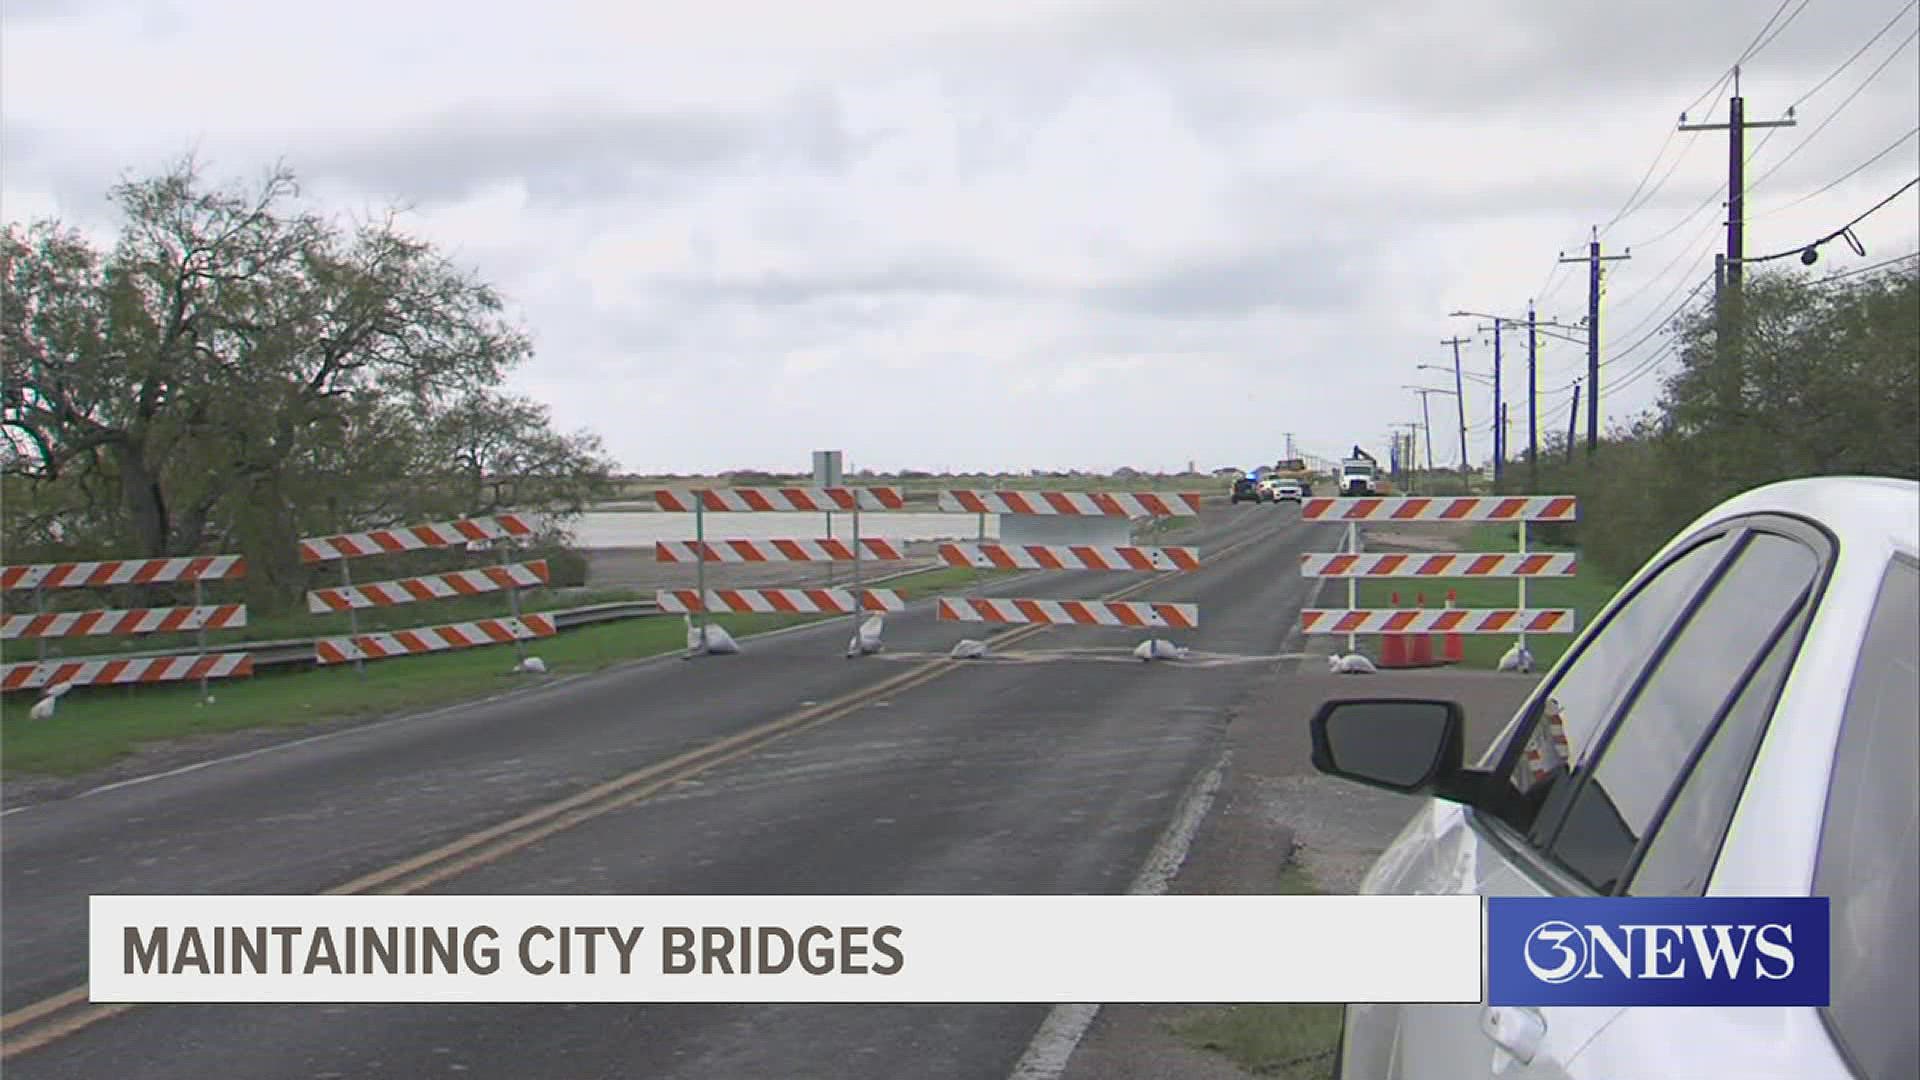 3NEWS' Bill Churchwell was able to city officials regarding bridge maintenance.